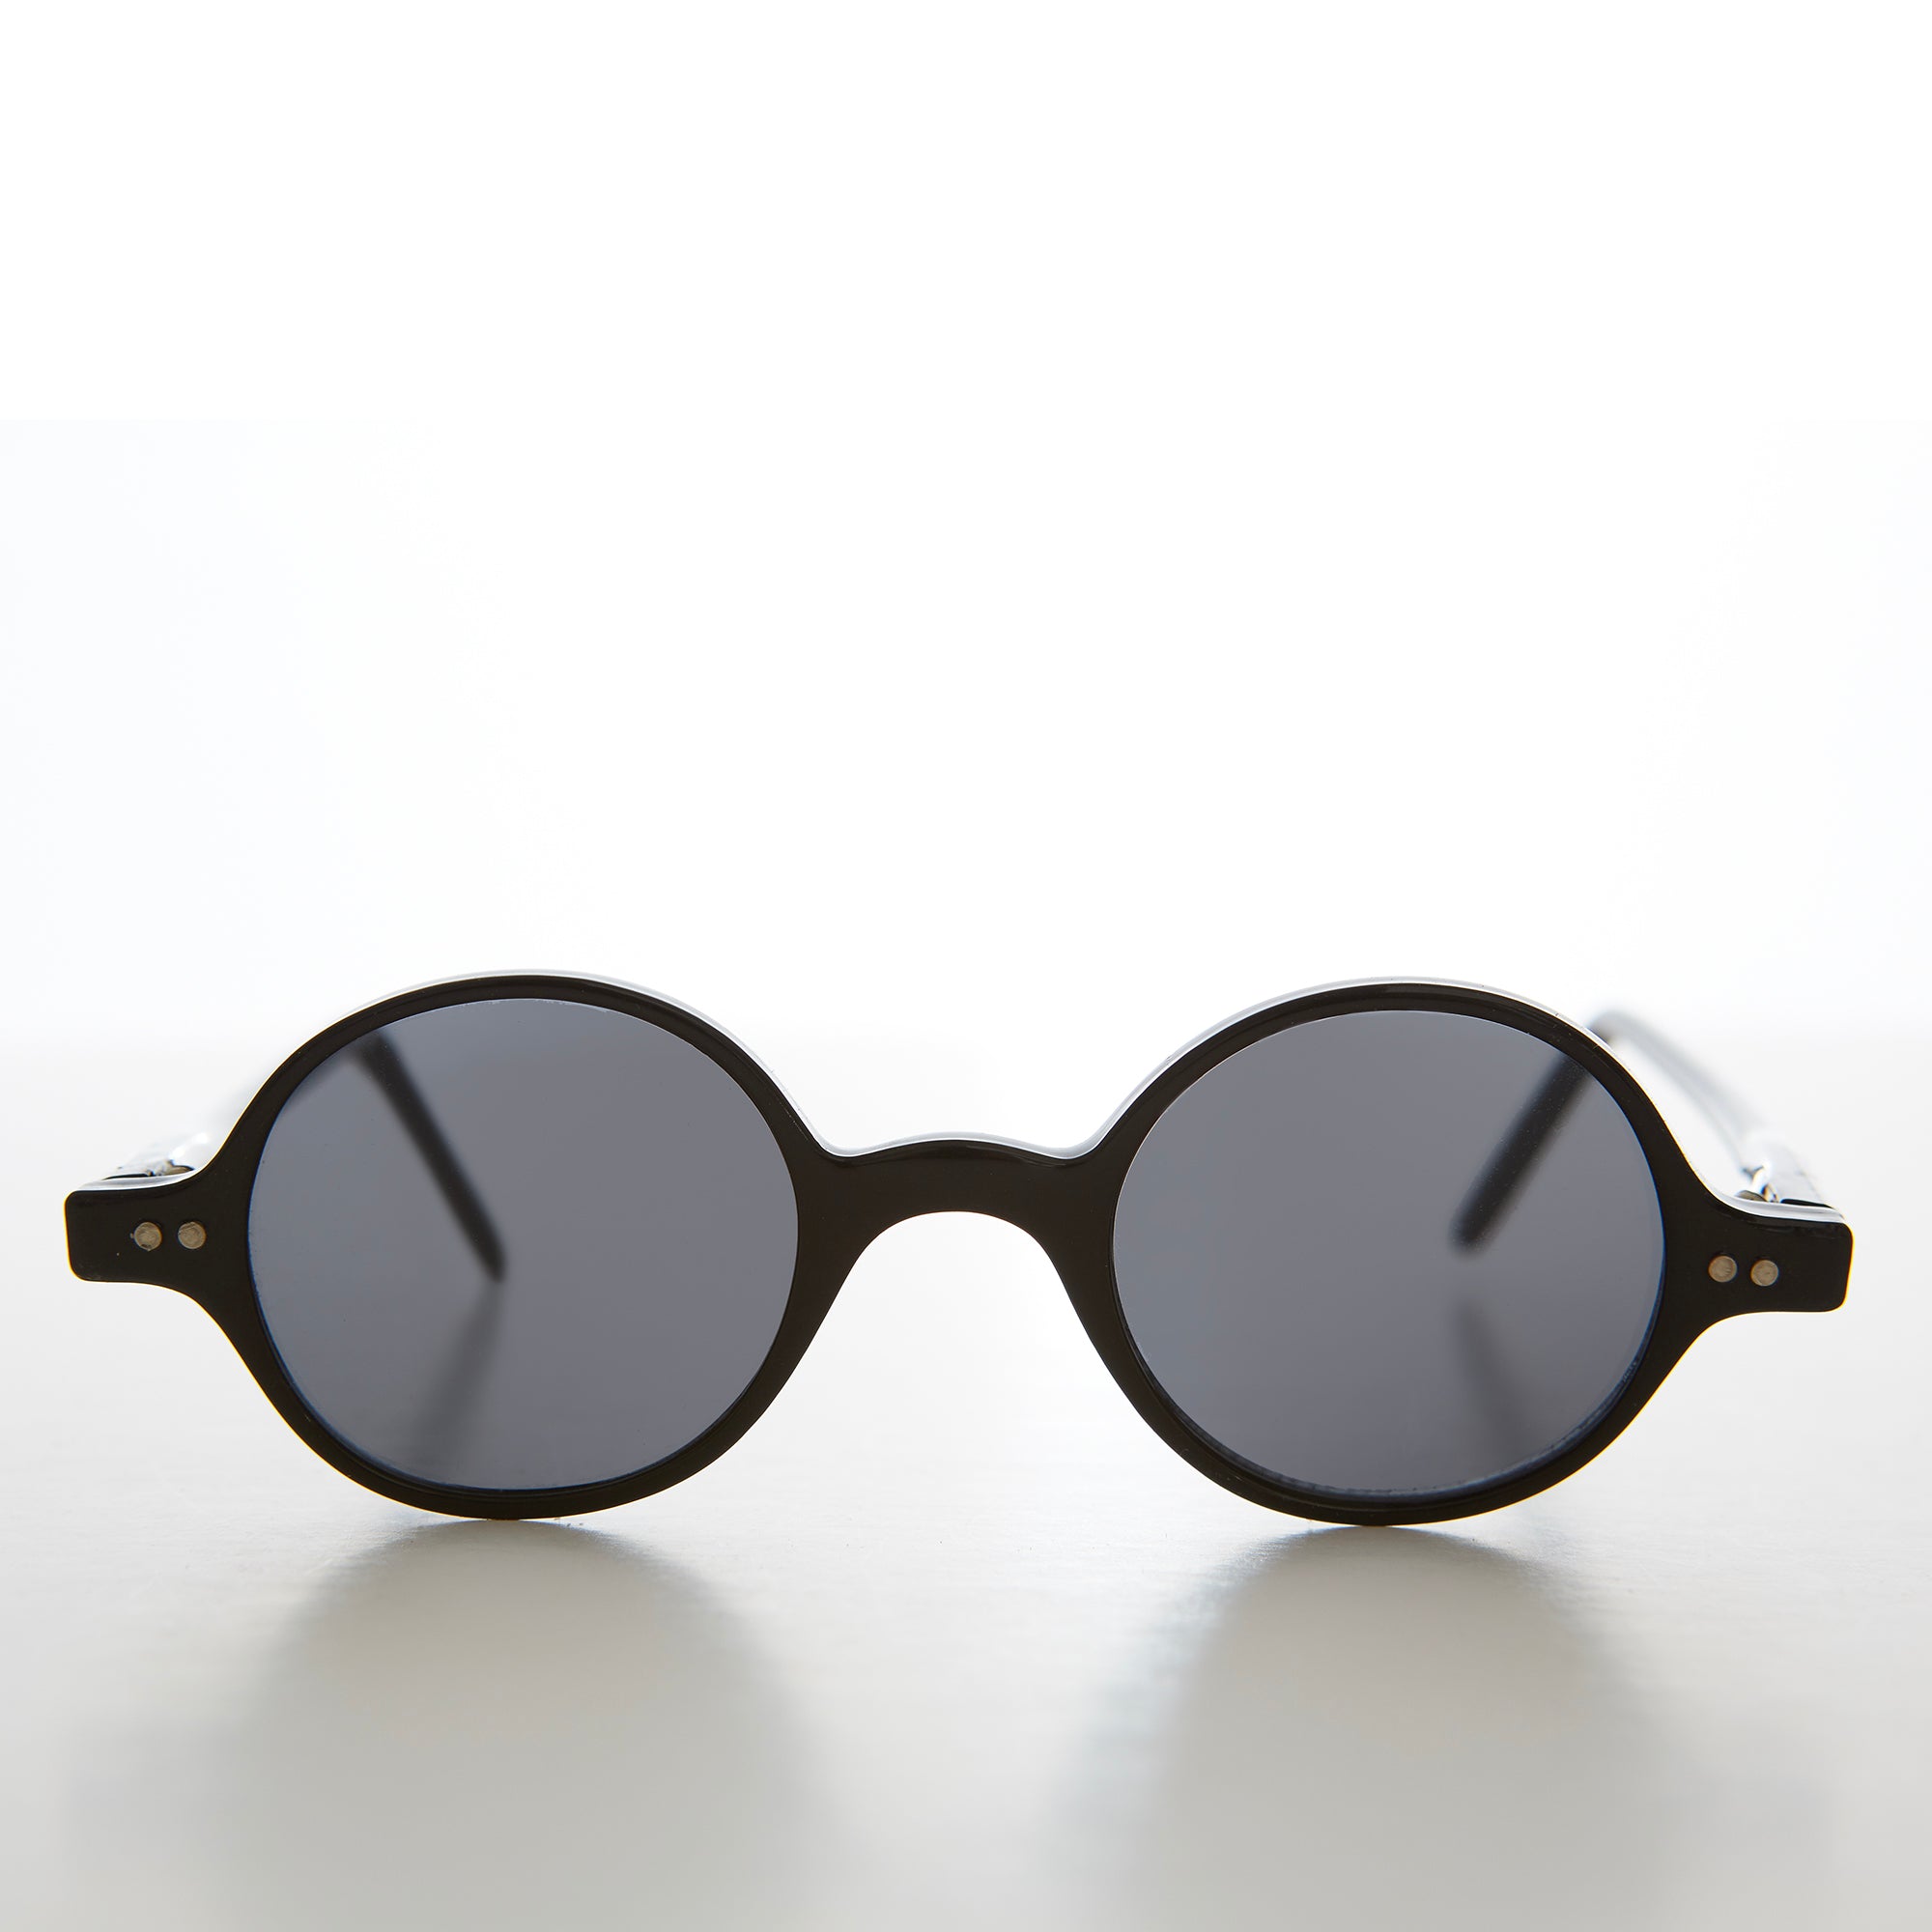 JEAN PAUL GAULTIER Round-frame gold-tone sunglasses | NET-A-PORTER